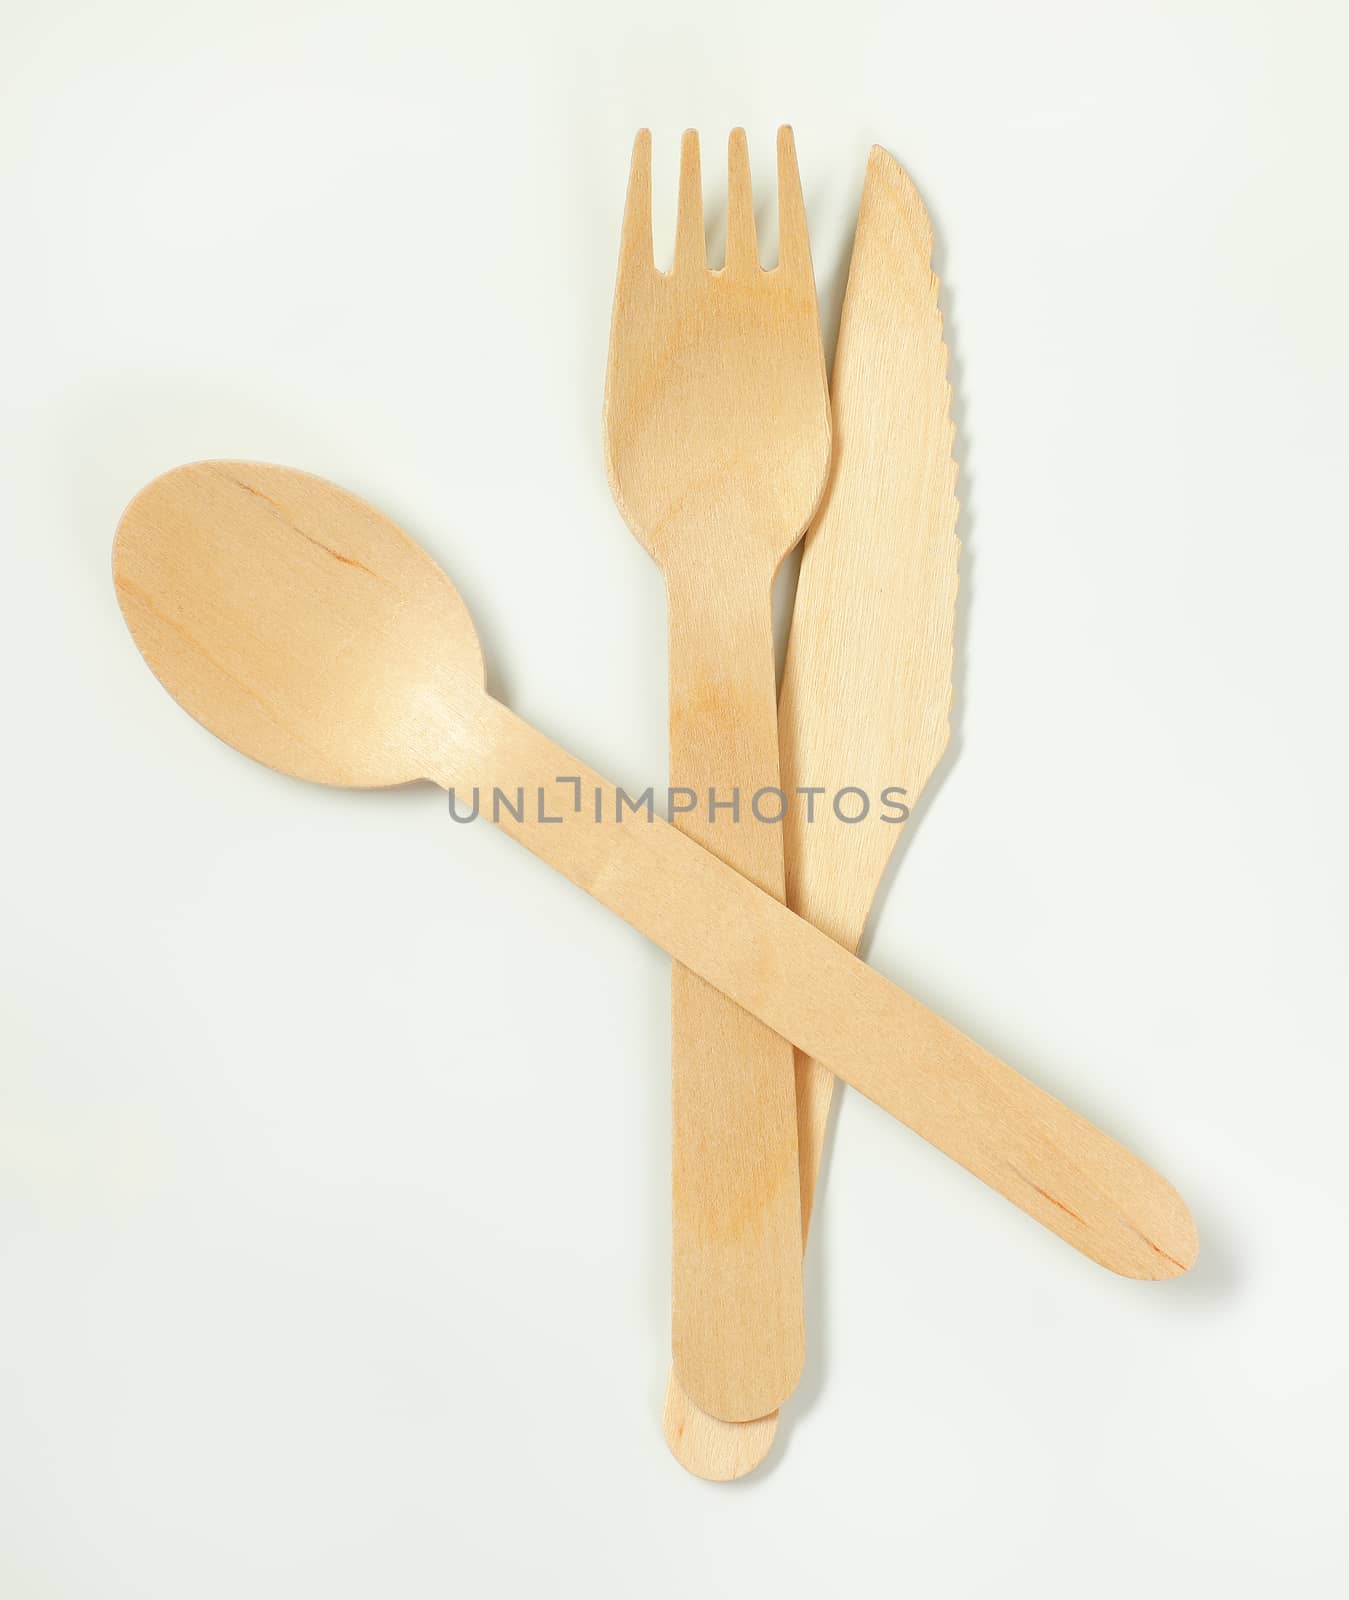 set of wooden cutlery by Digifoodstock